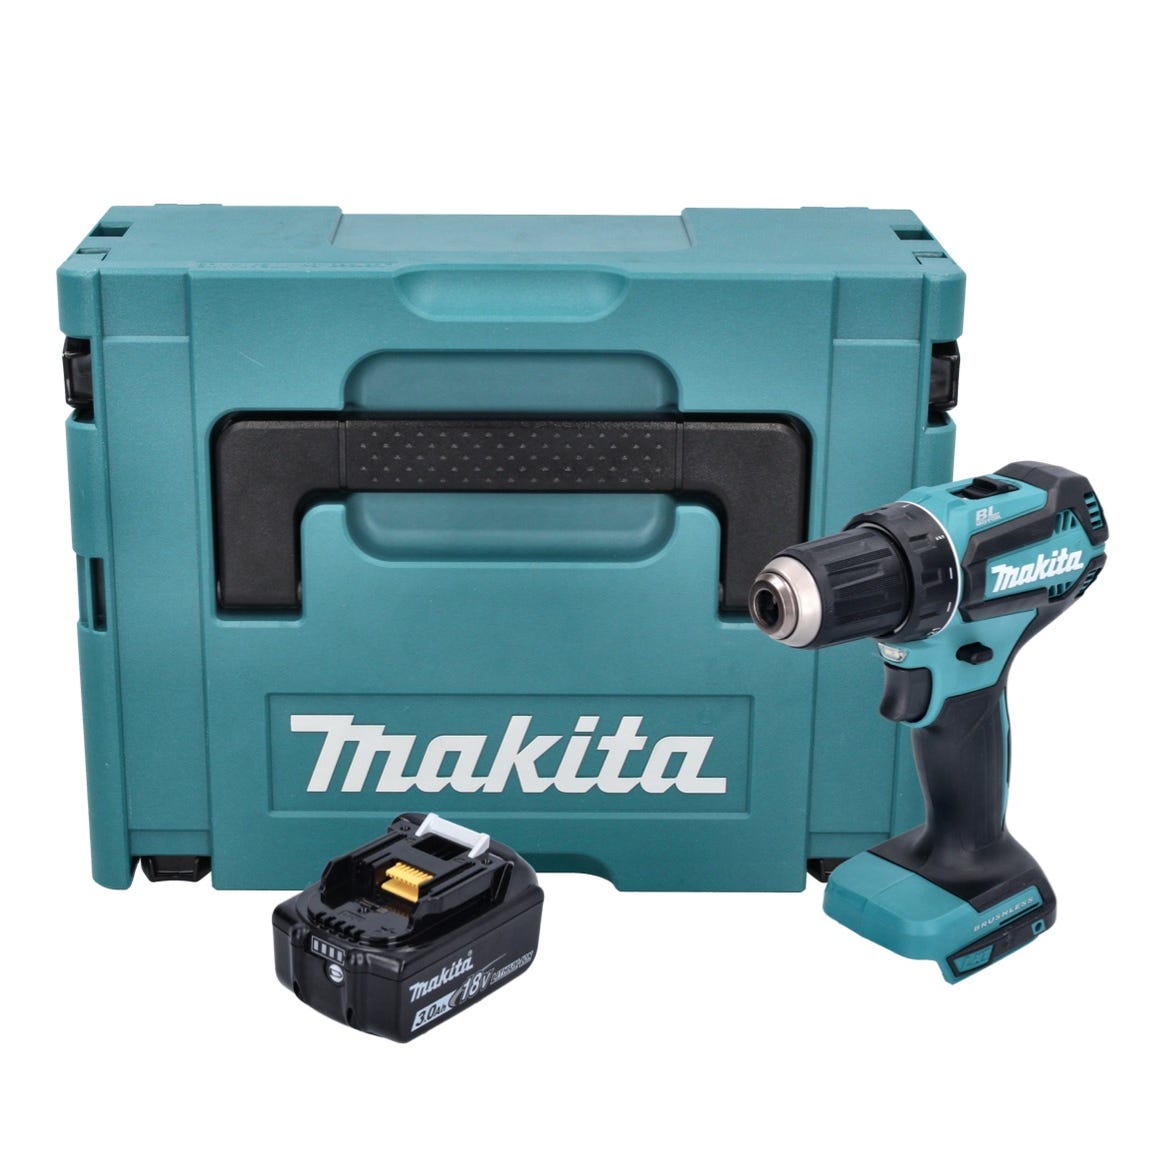 Makita DDF 485 F1J Perceuse-visseuse sans fil 18 V 50 Nm brushless + 1x Batterie 3,0 Ah + Coffret Makpac - sans chargeur 0